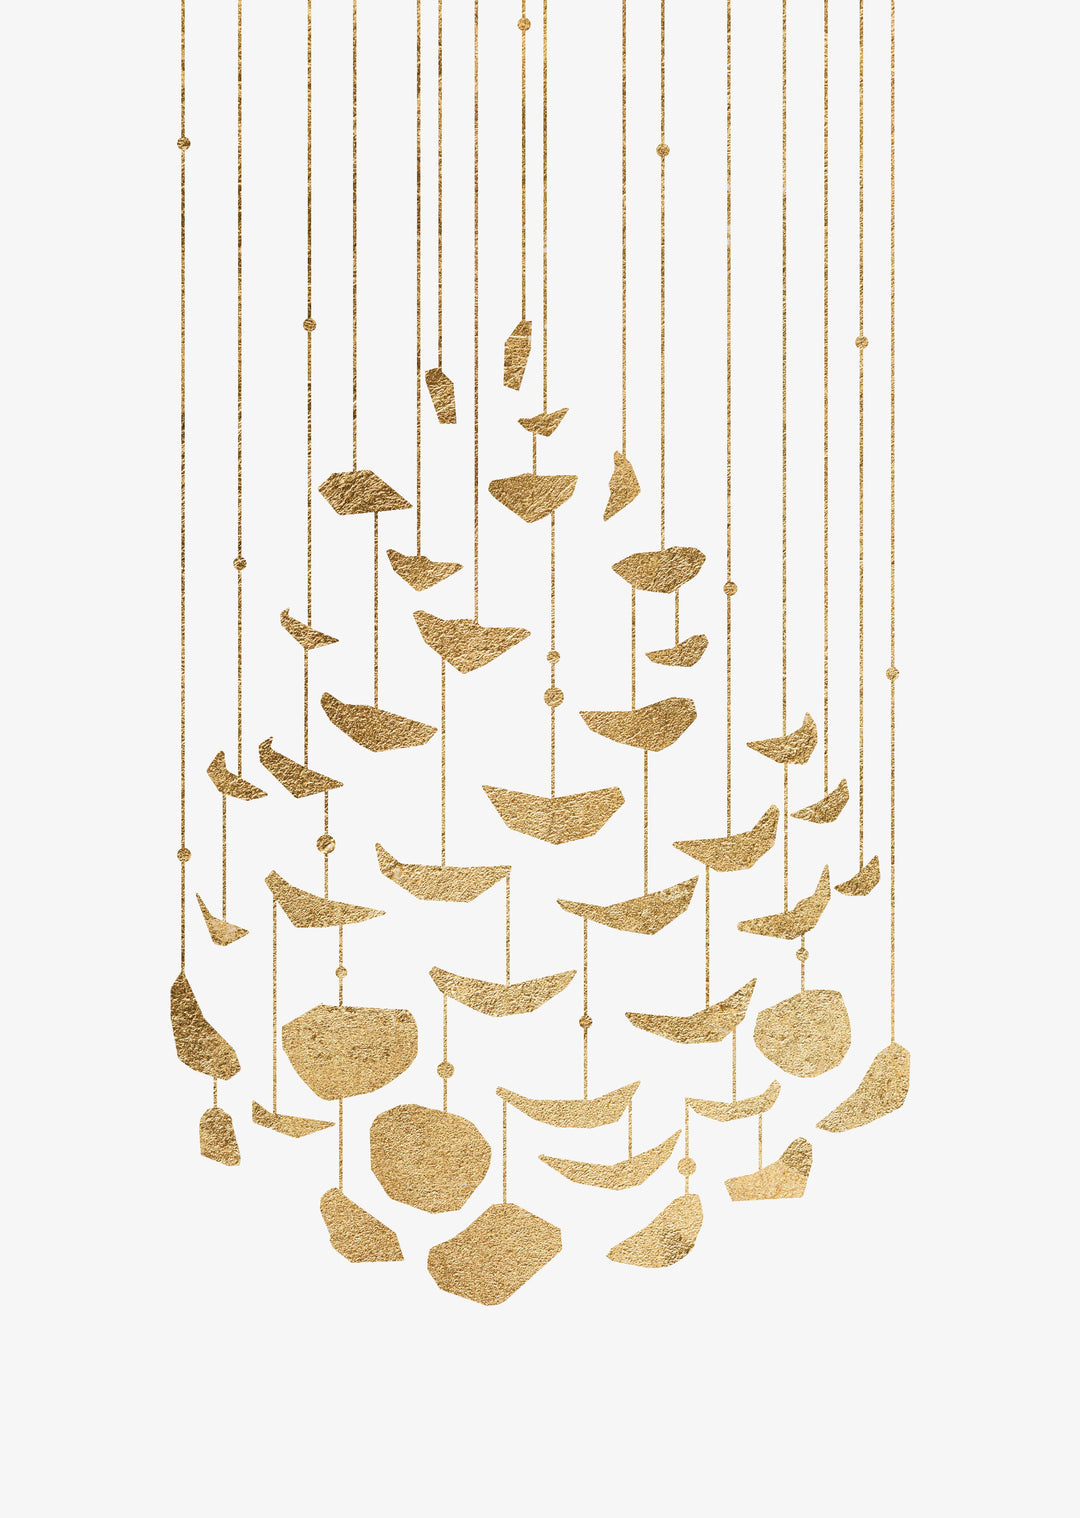 Suspended Gold Pinecone Wall Art Print , Contemporary and Stylish Christmas Decoration Alternative Xmas Decor